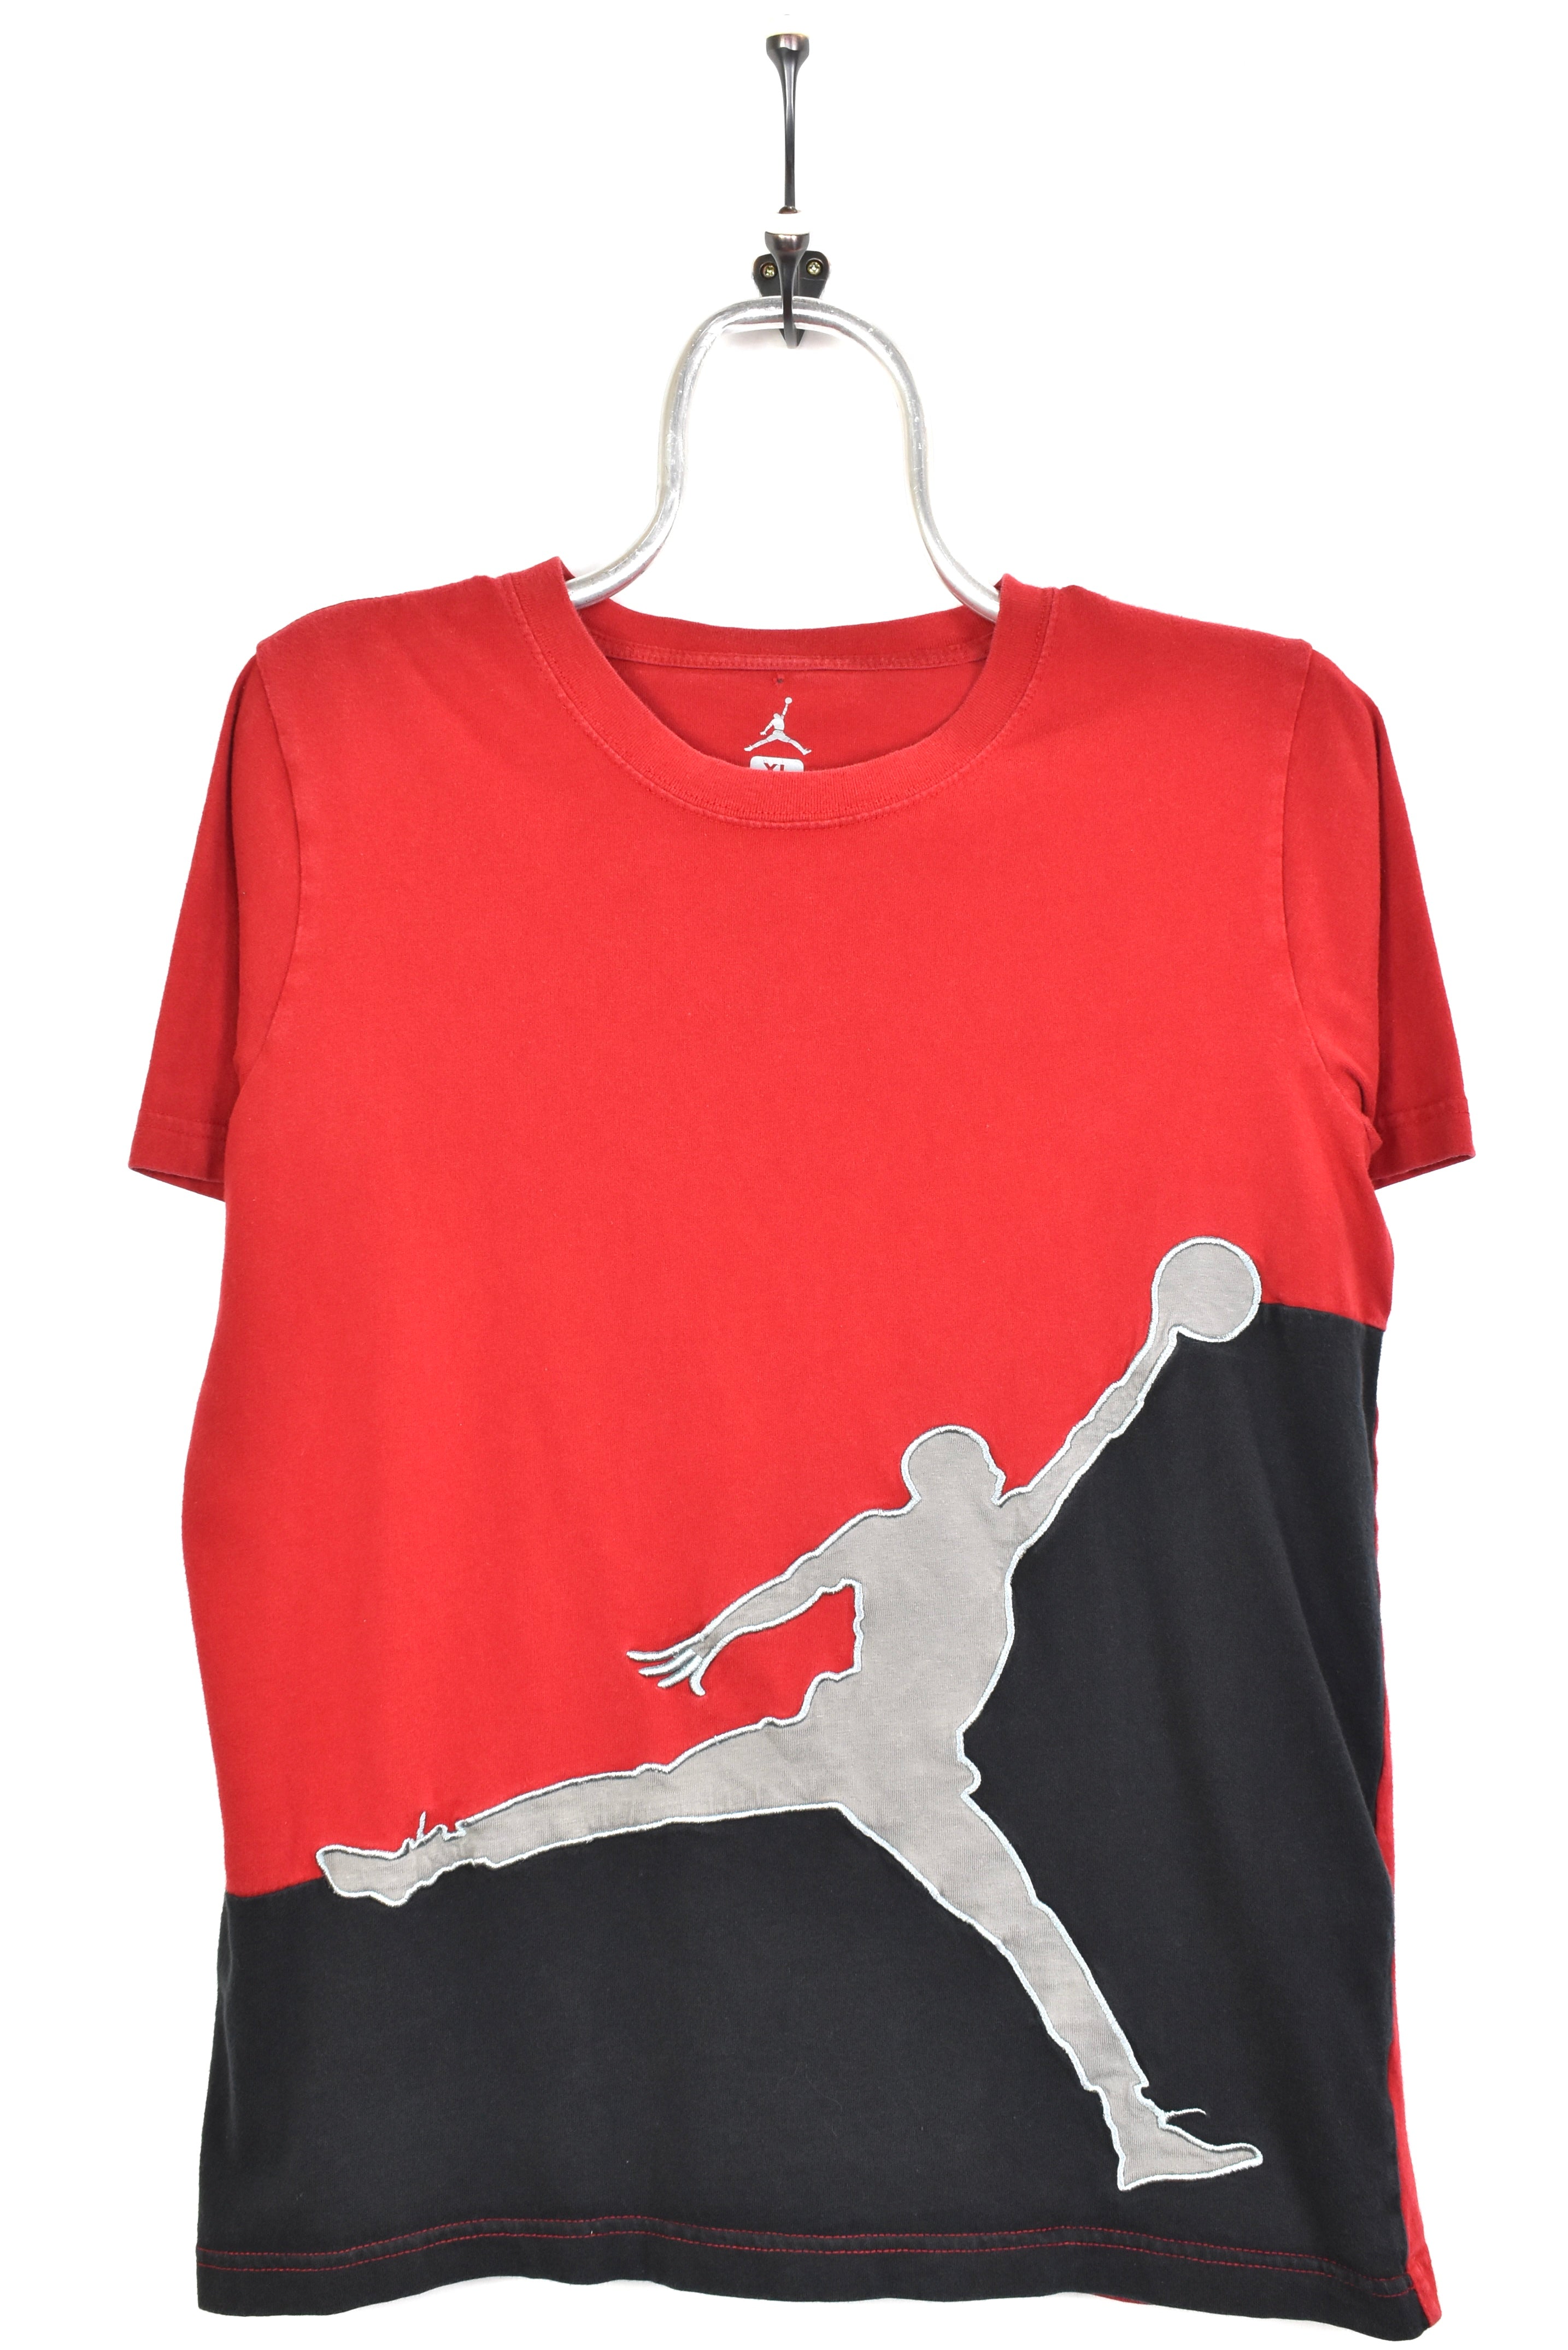 Vintage Nike shirt, Air Jordan embroidered tee - small, red NIKE